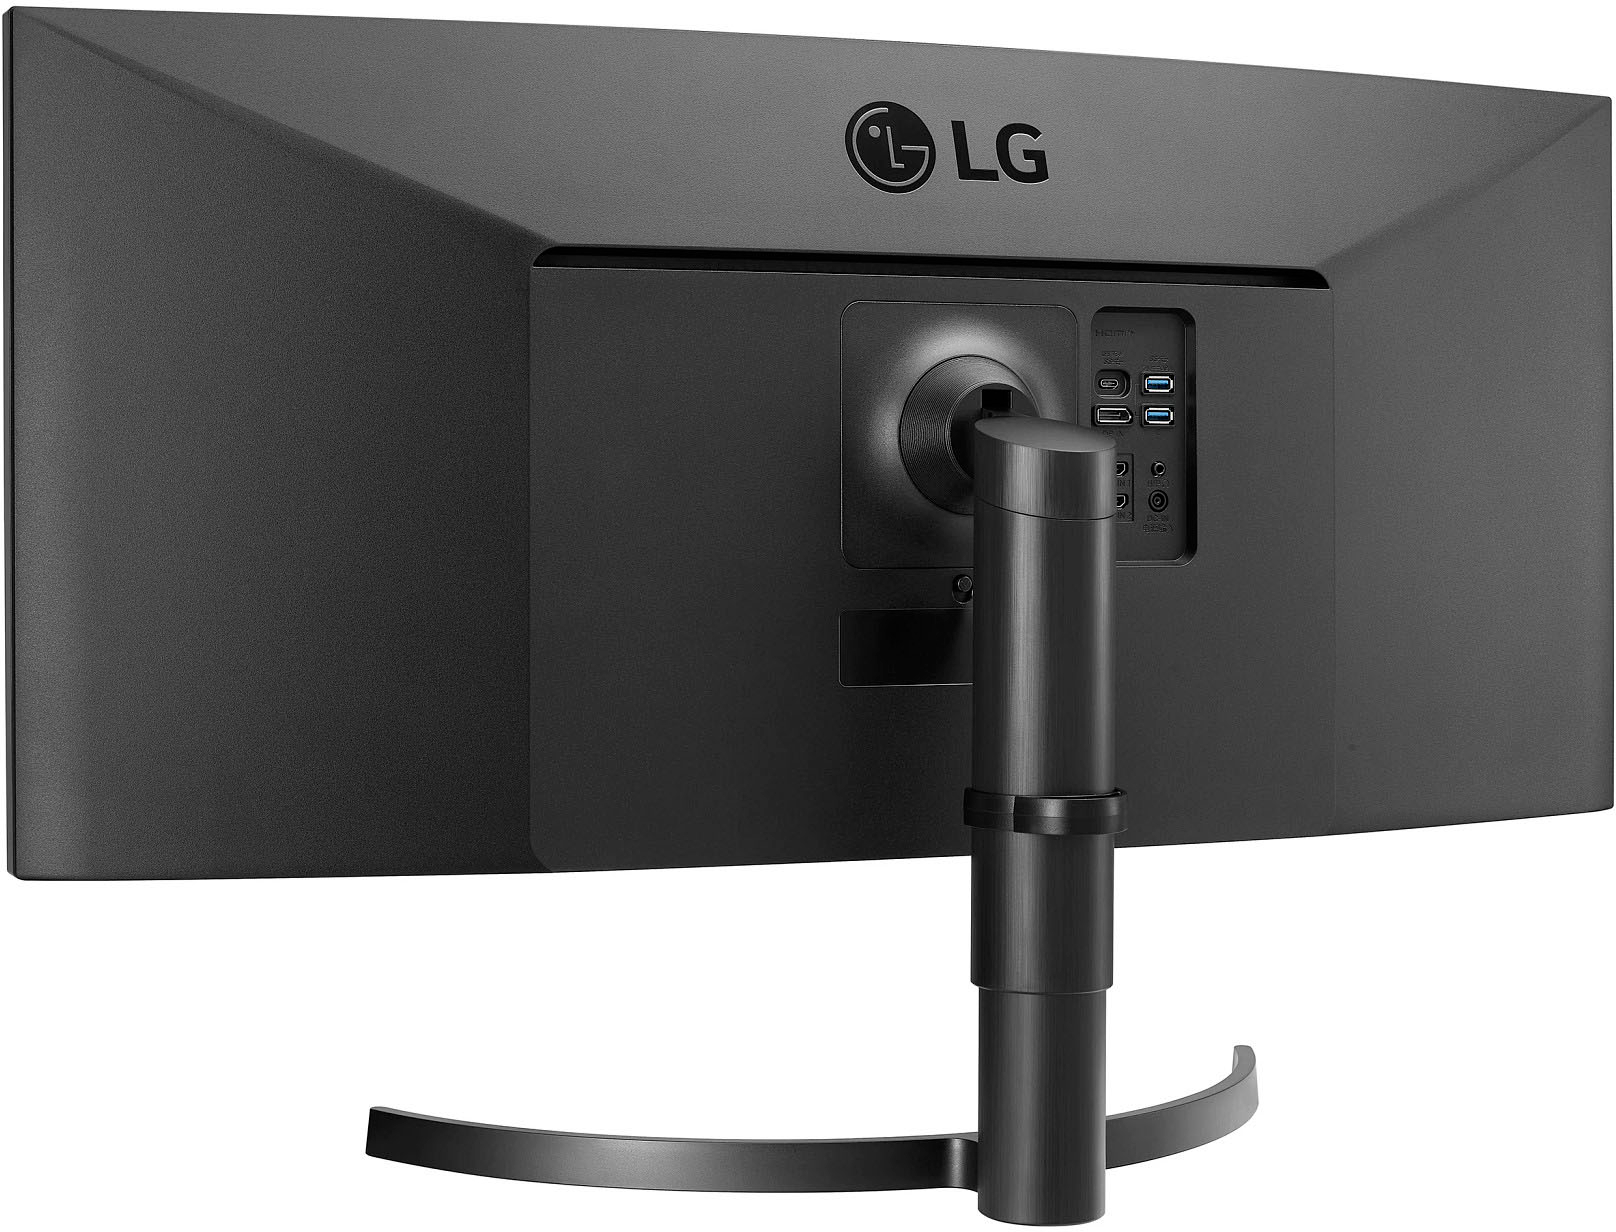 Left View: LG - 35" LED Curved UltraWide QHD AMD Freesync Monitor with HDR (HDMI, DisplayPort, USB) - Black